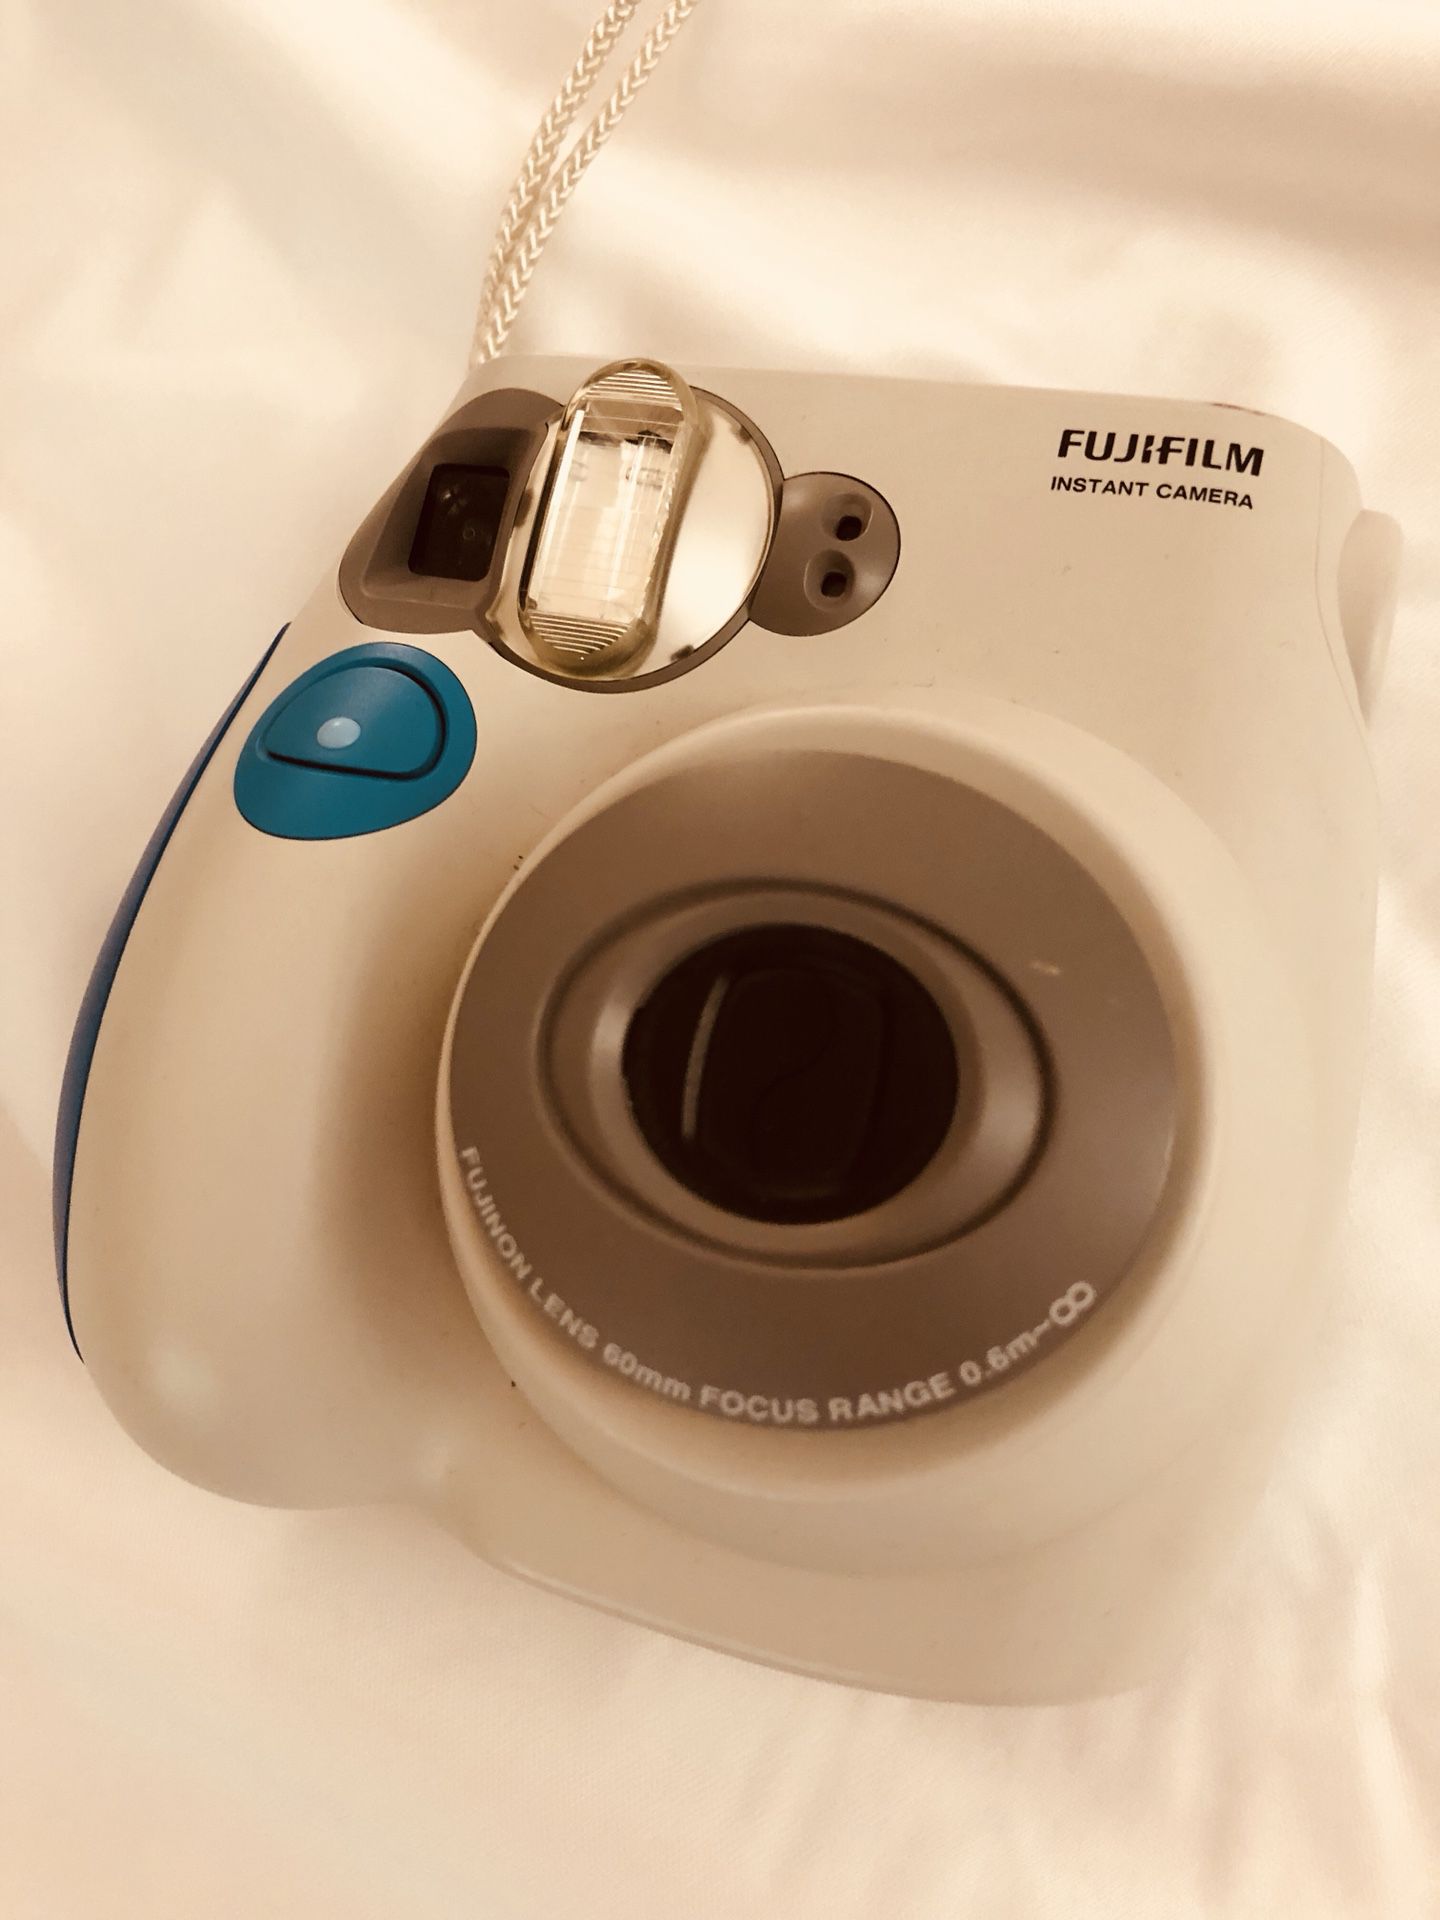 Fujifilm Insta Camera